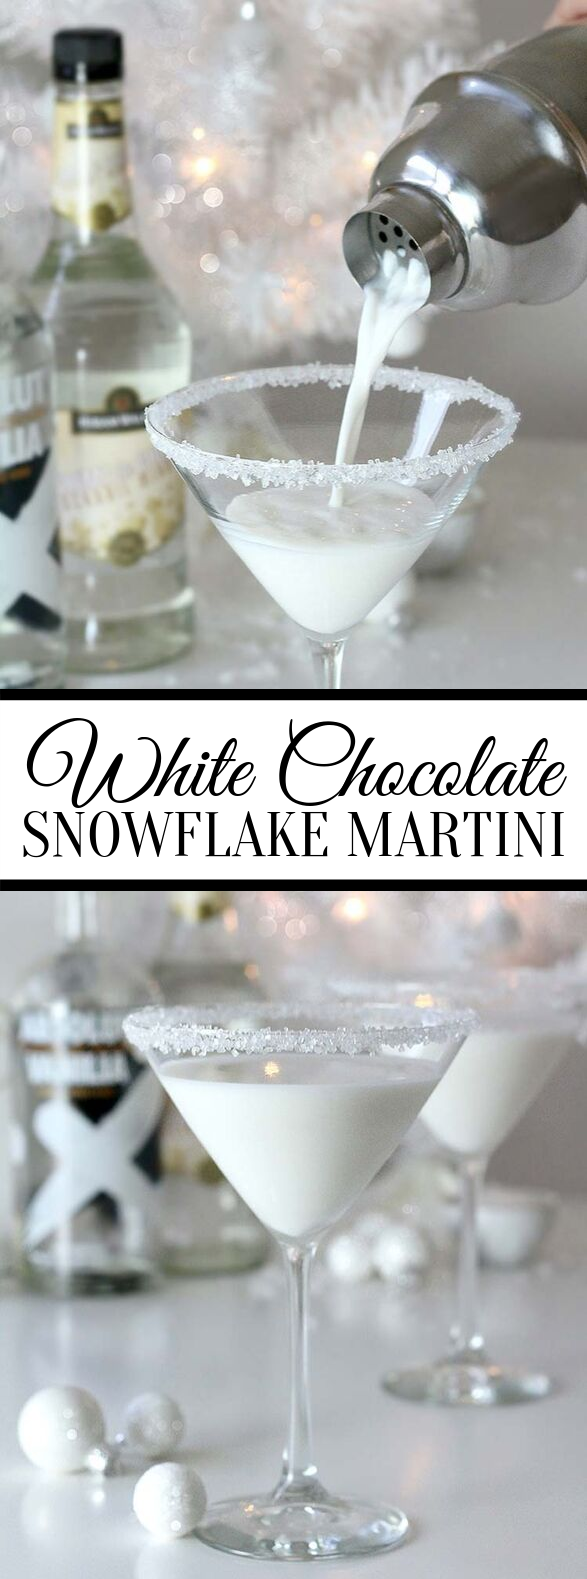 White Chocolate Snowflake Martini #drinks #christmas